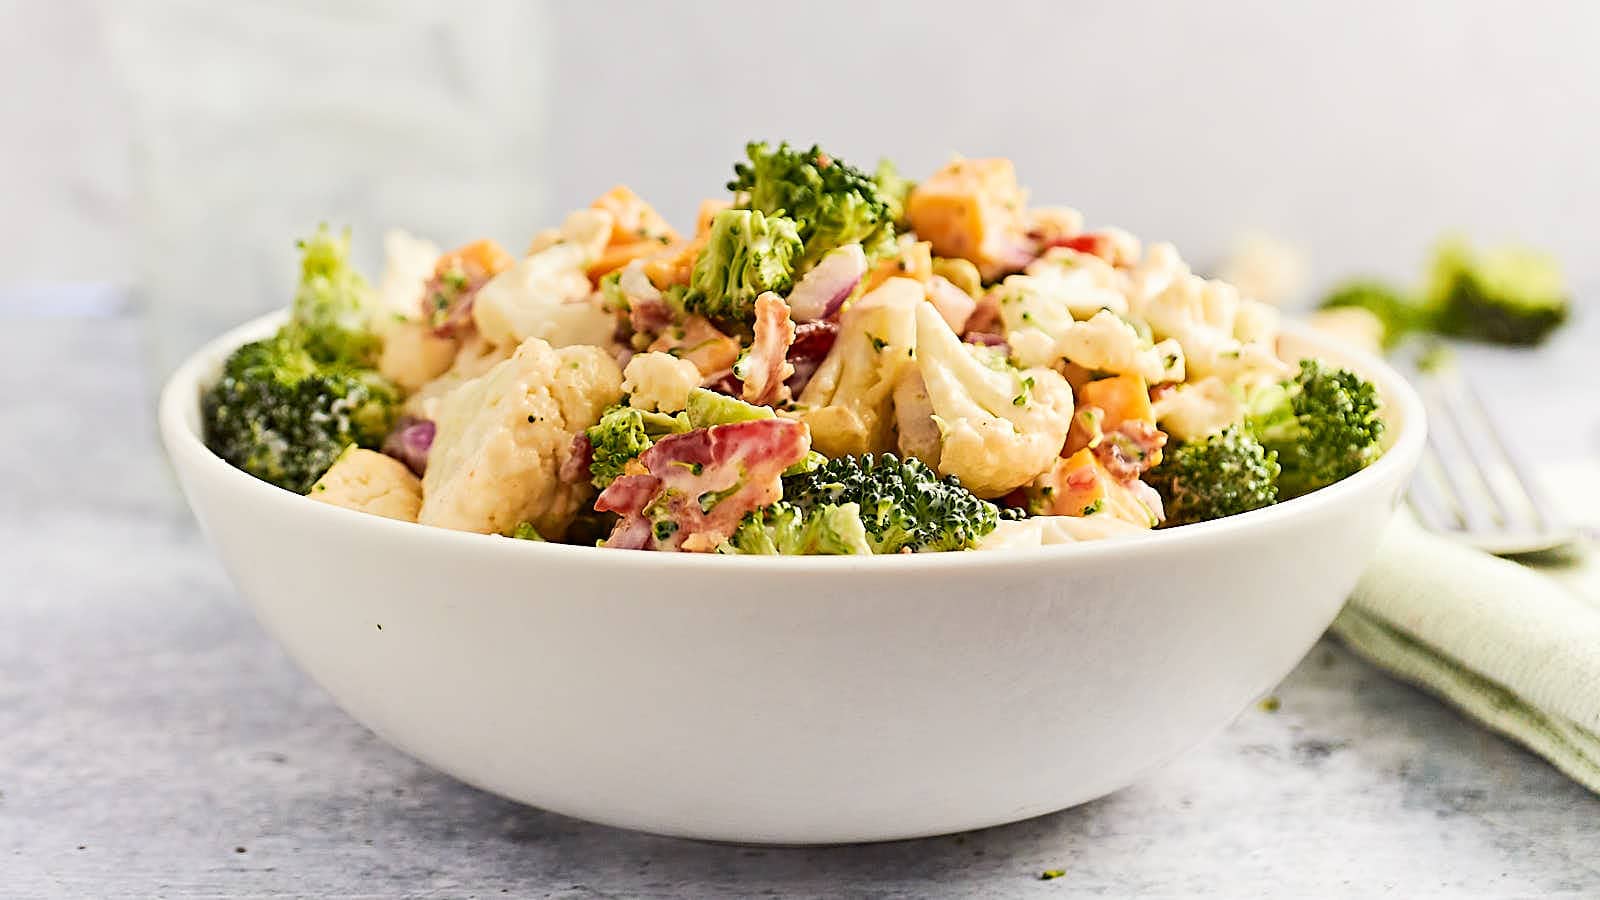 Broccoli Cauliflower Salad recipe by Cheerful Cook.